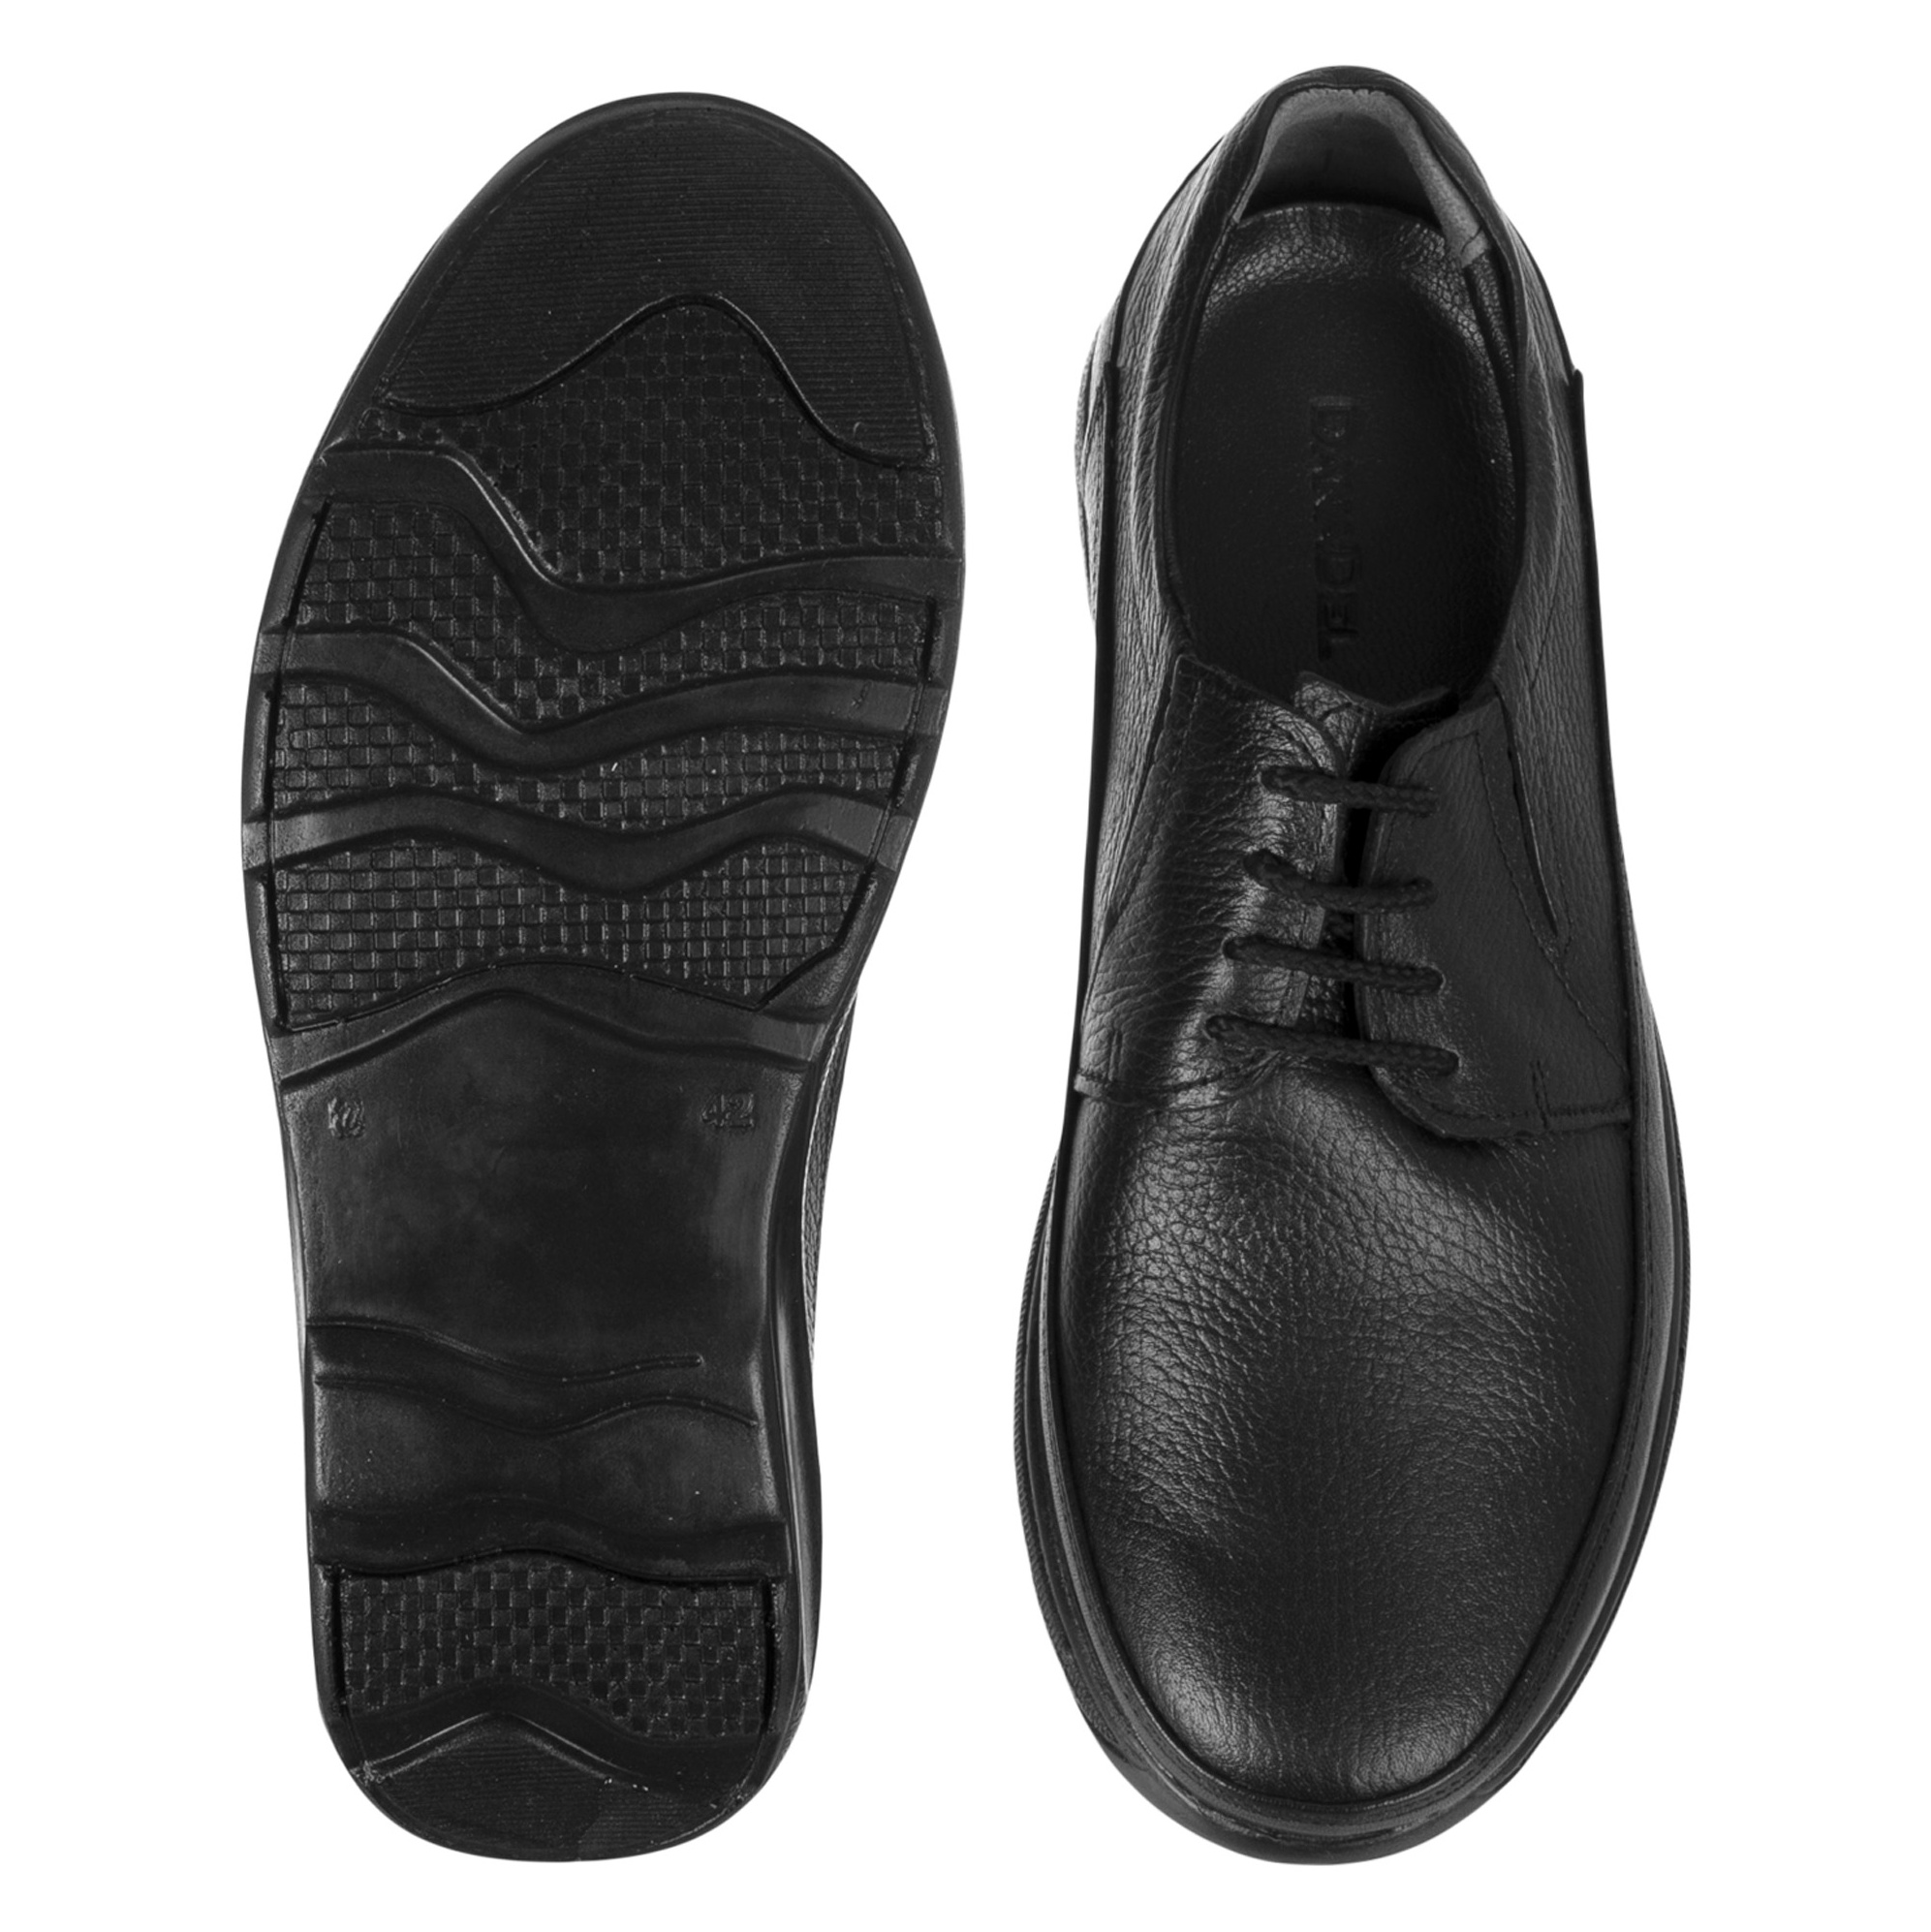 کفش روزمره مردانه دانادل مدل 7726B503101 - مشکی - 6